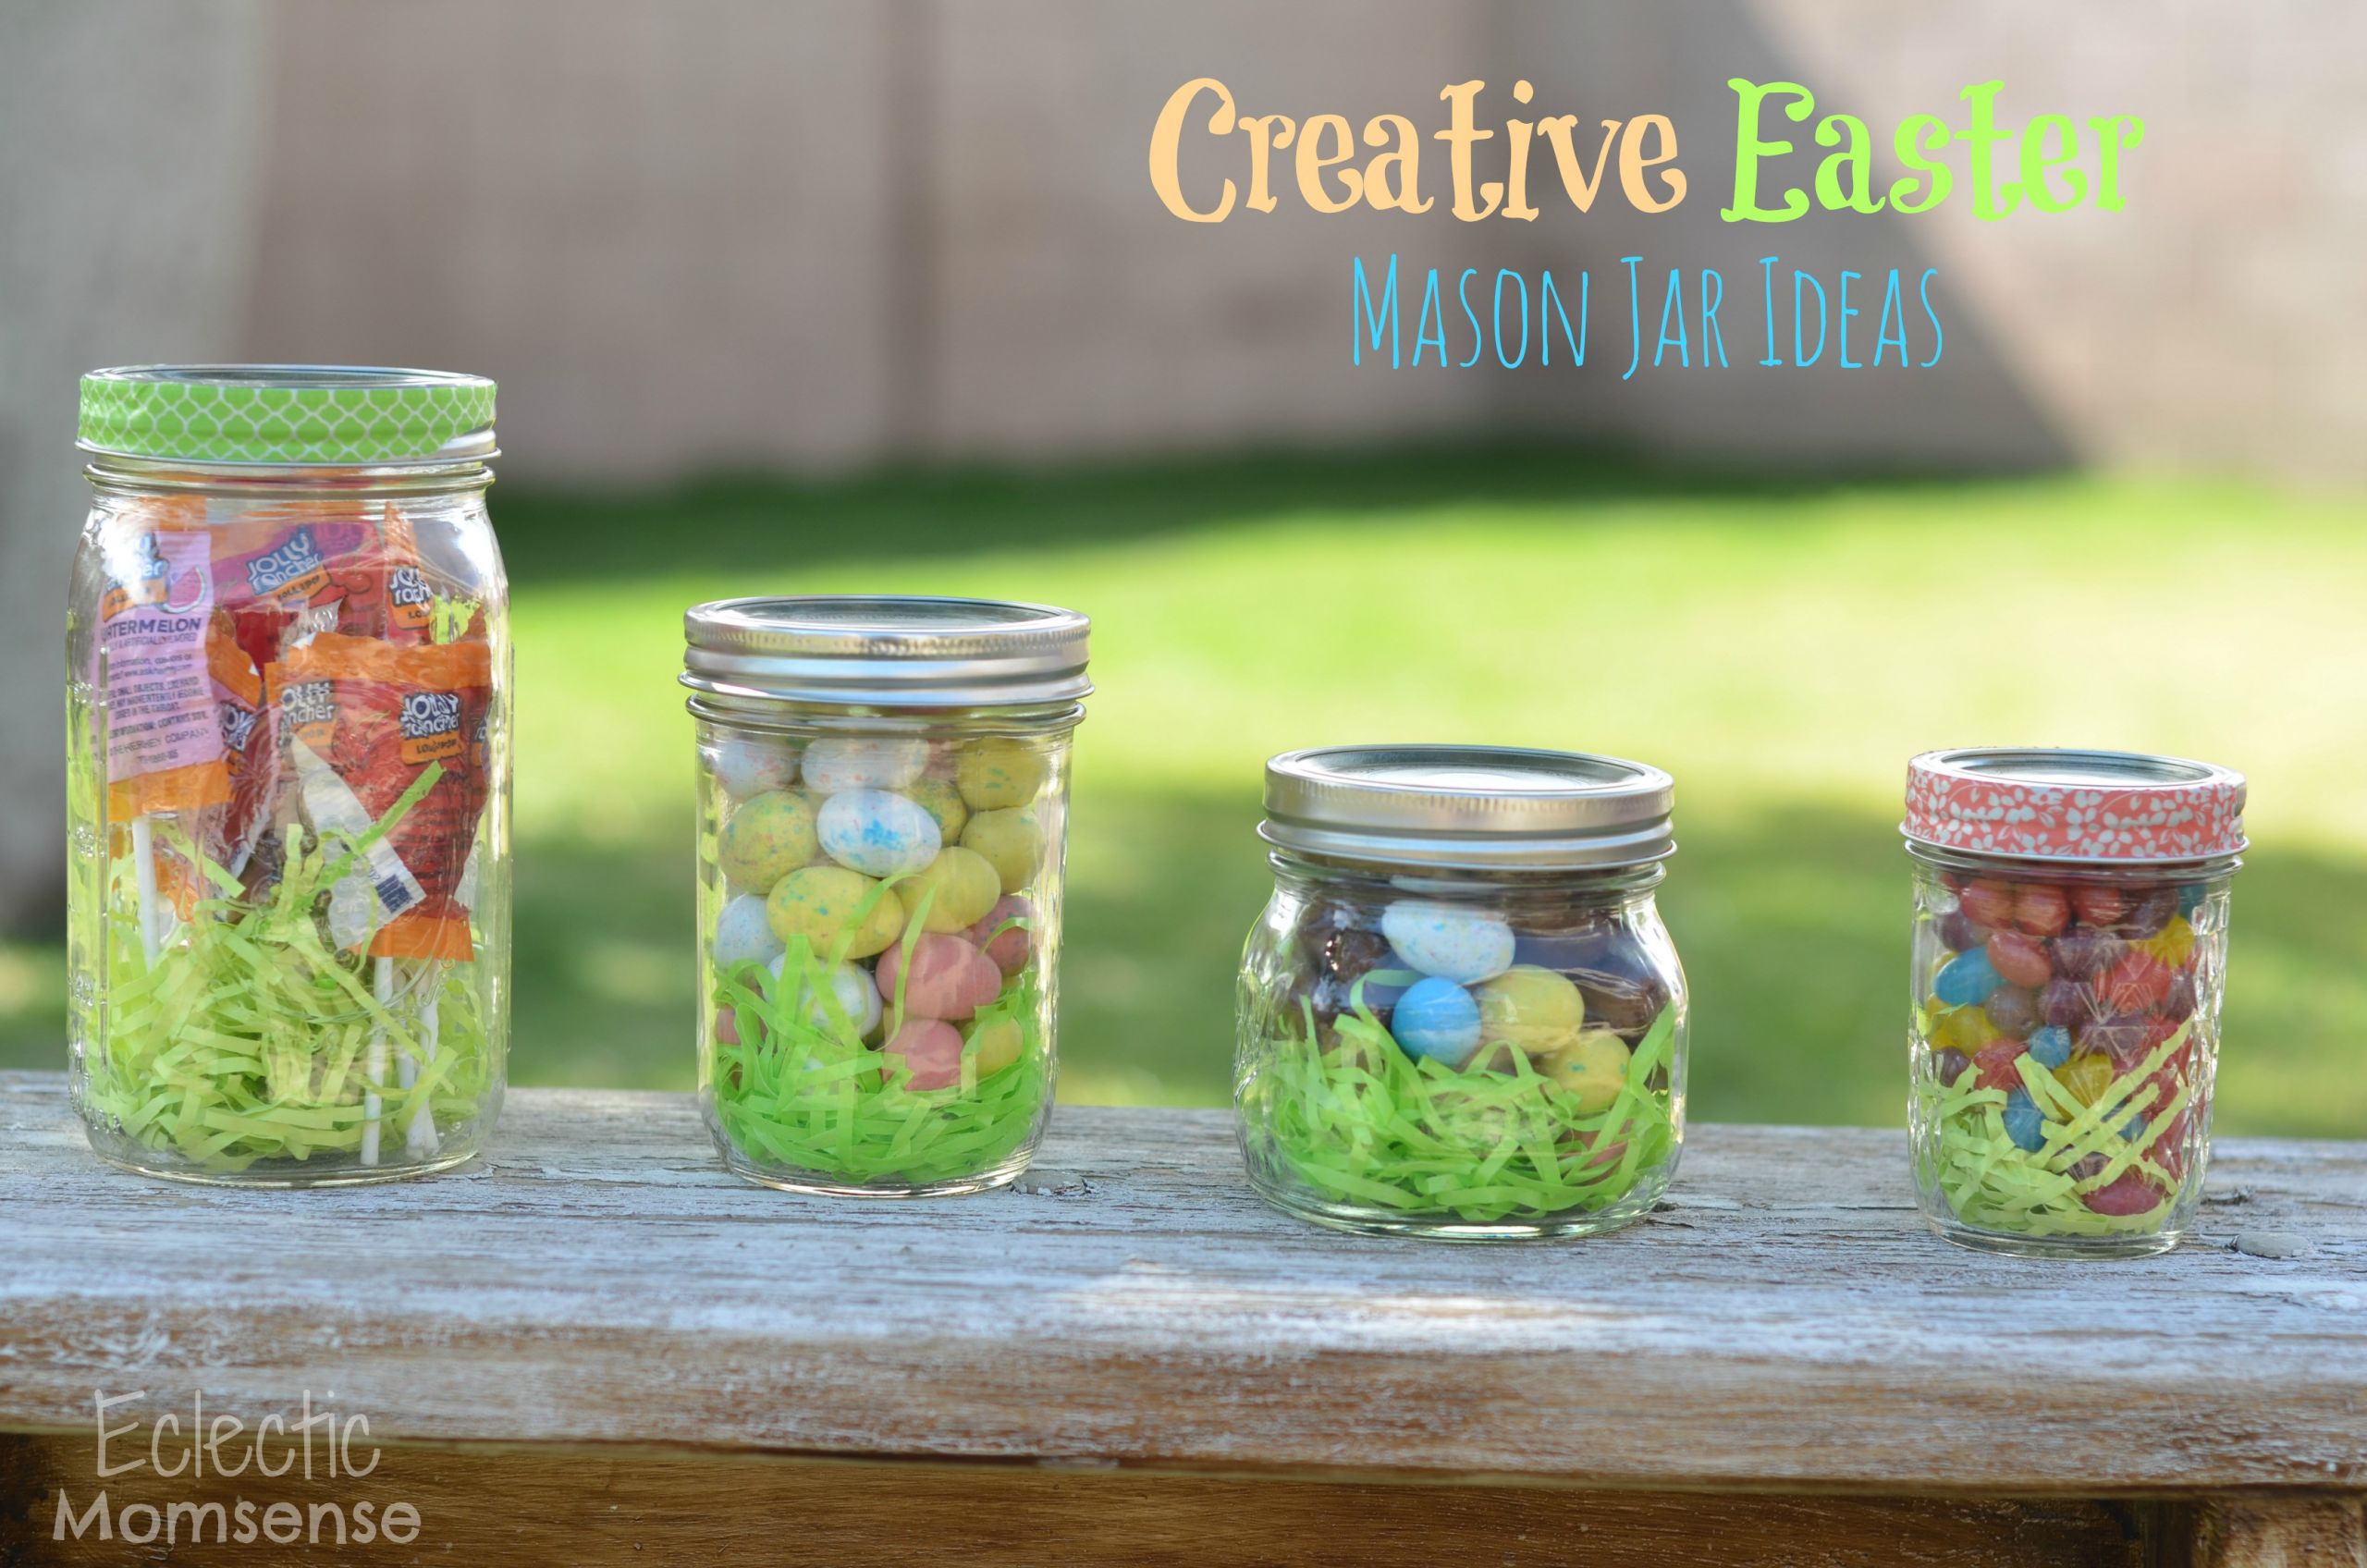 Easter Mason Jar Ideas
 Creative Easter Mason Jar Ideas & a Giveaway Eclectic